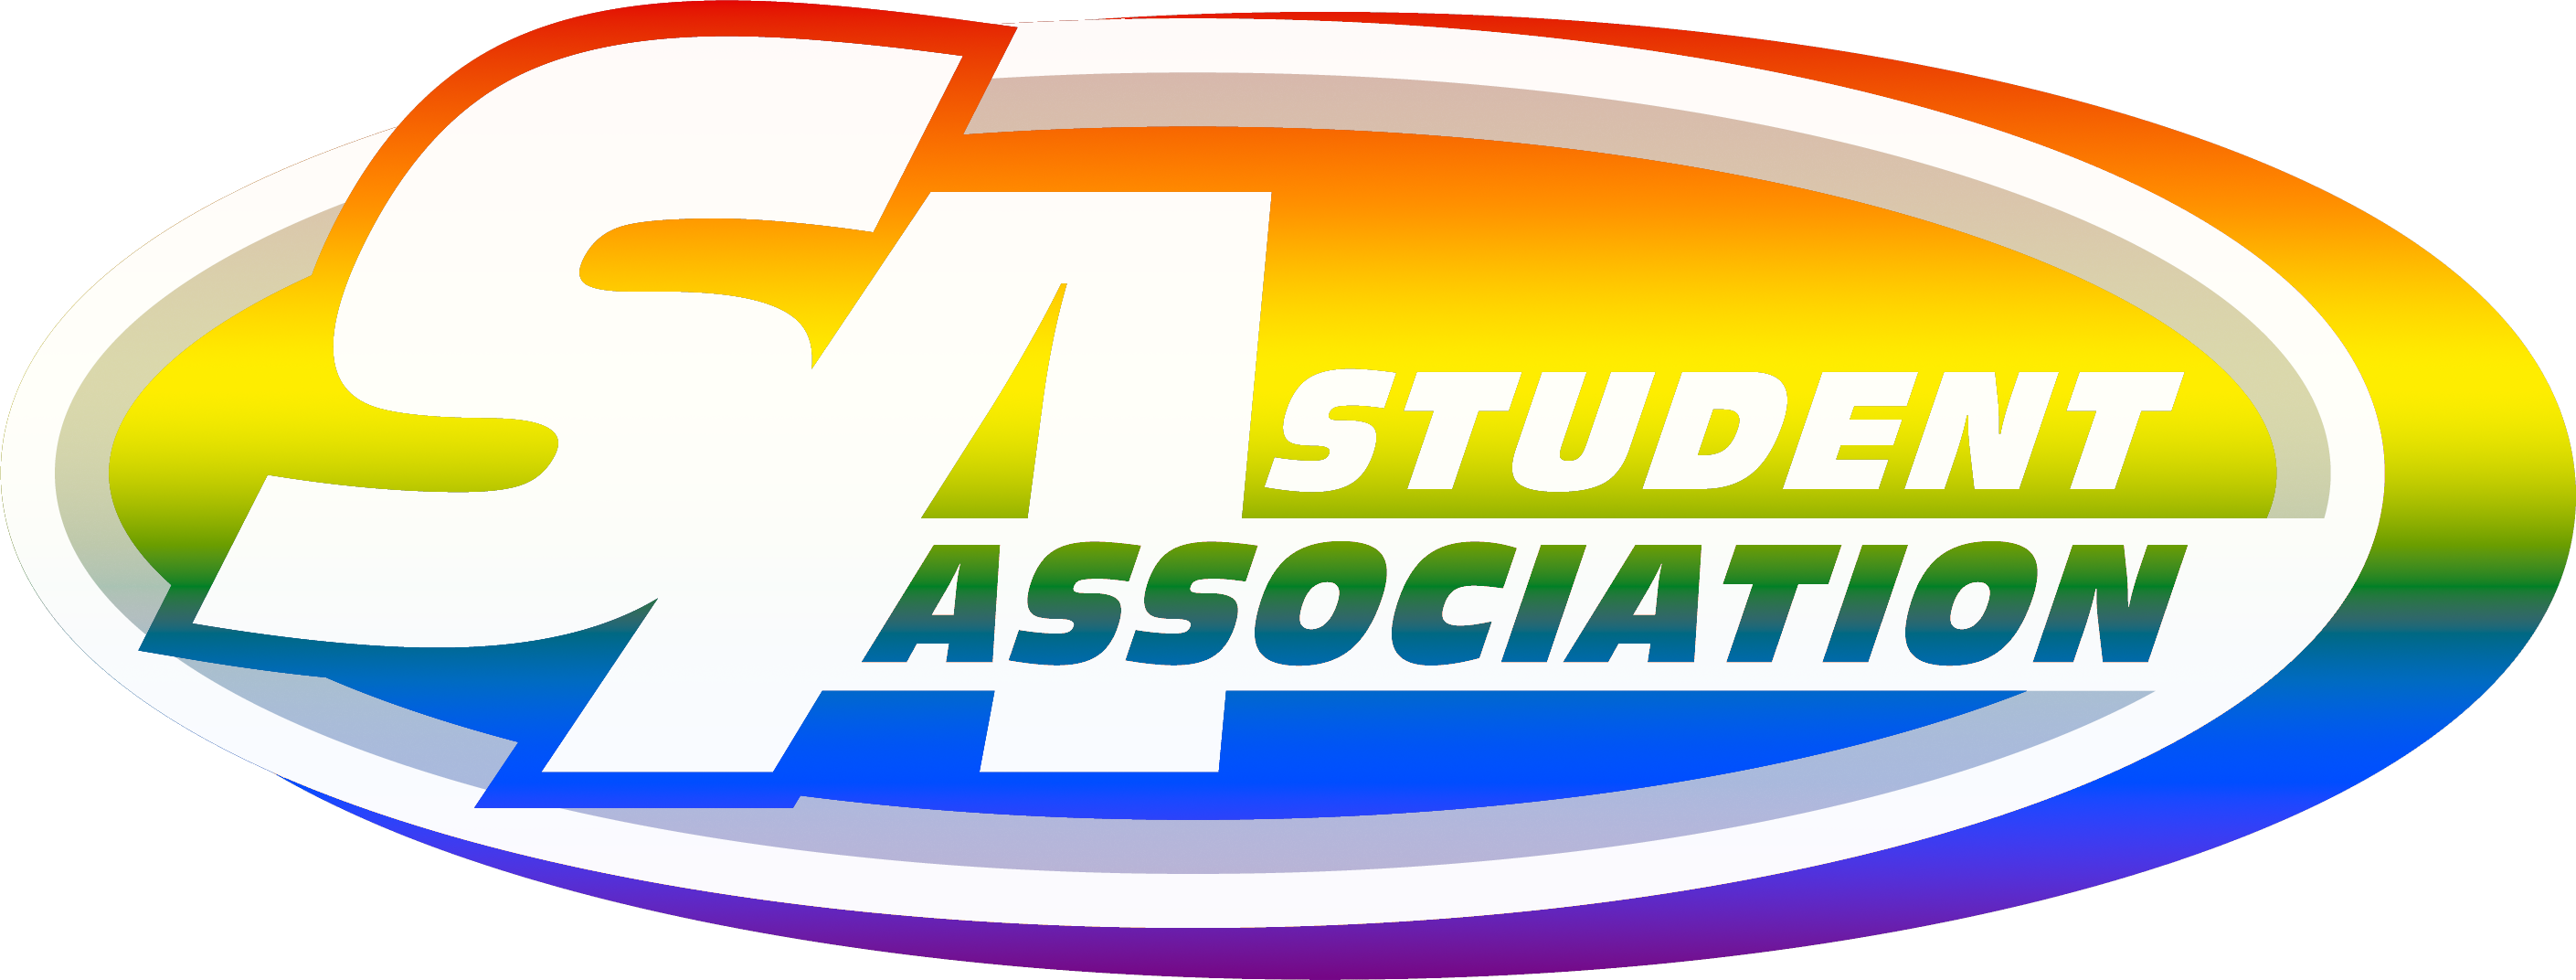 UB Student Association Website